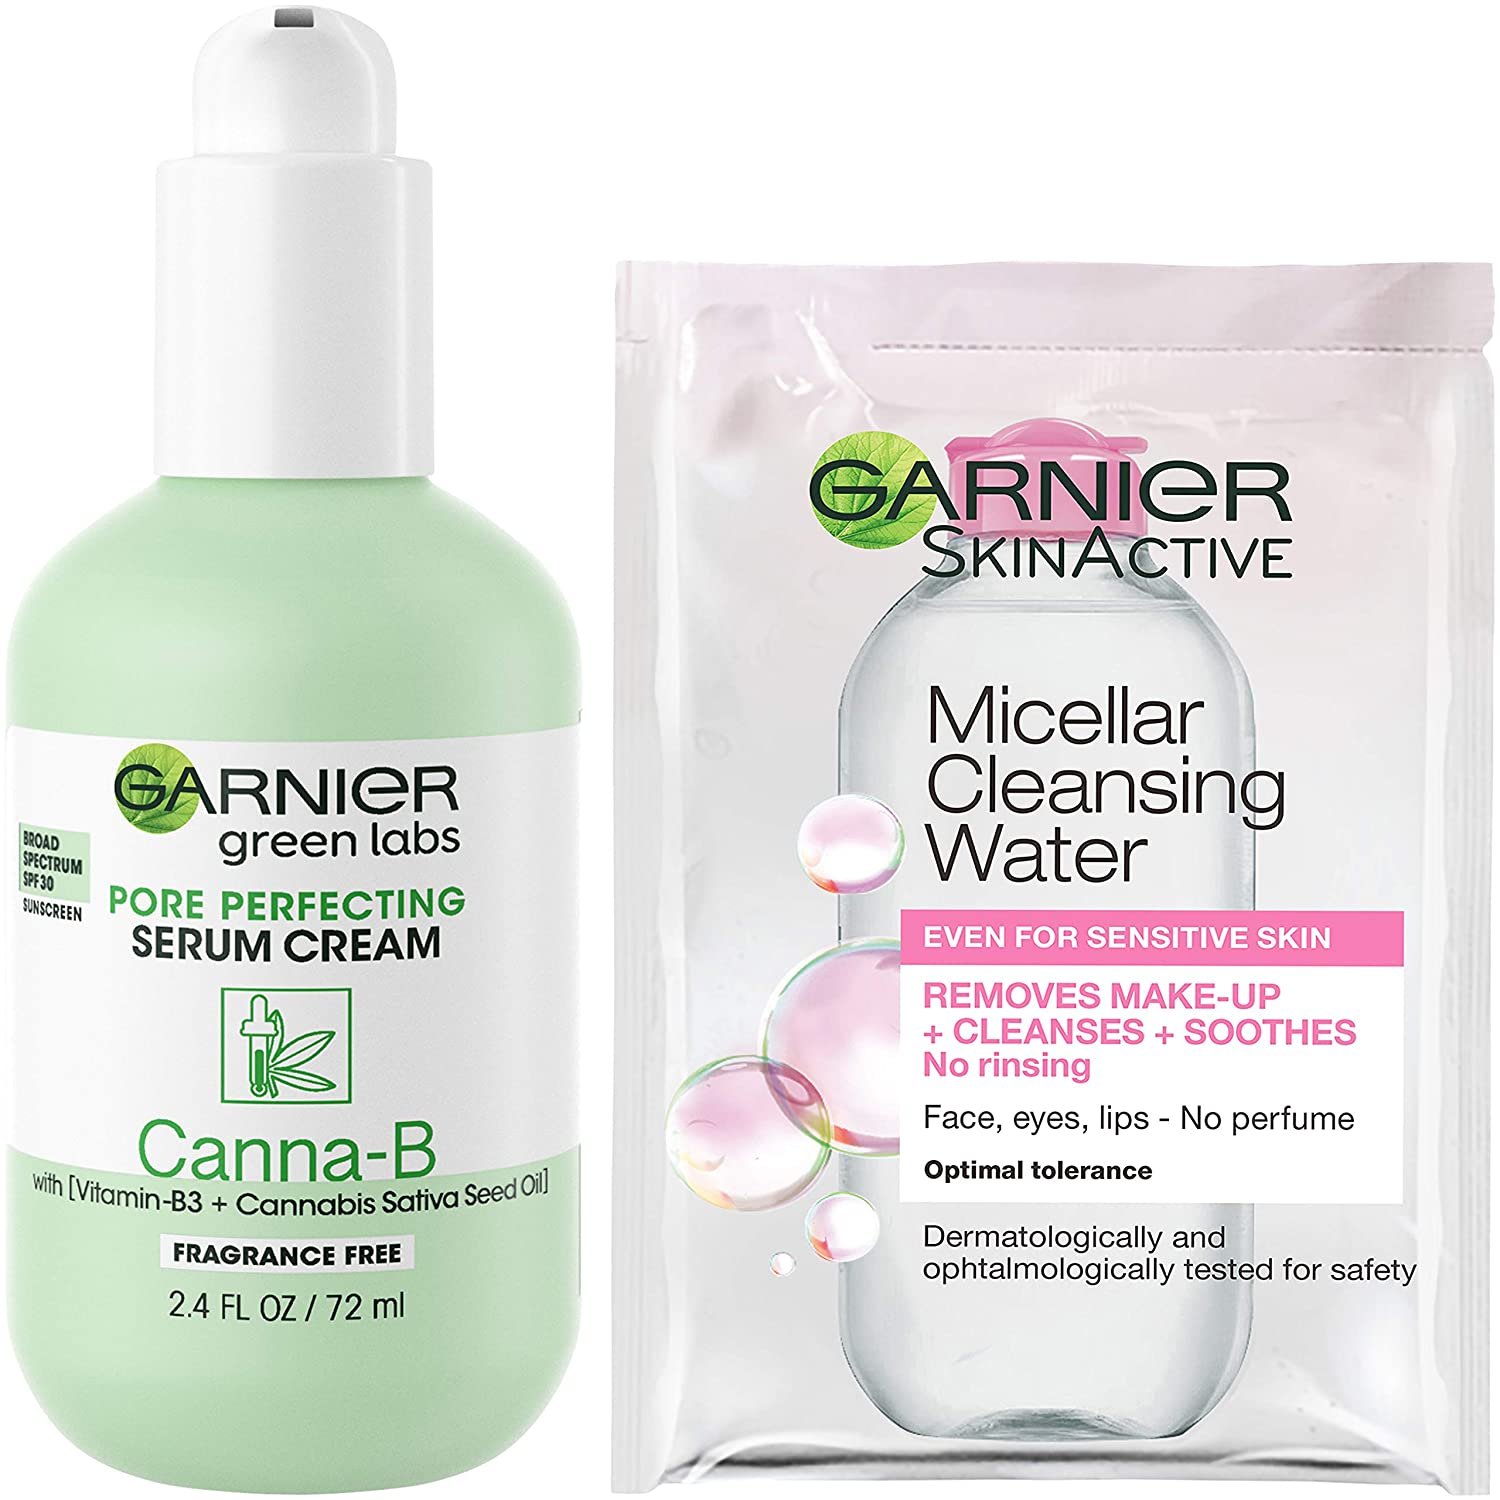 garnier skinsactive green labs canna b pore perfecting serum cream moisturizer fragrance free spf 30 and niacinamide vitamin b3 and cannnabis satvia seed oil.jpg